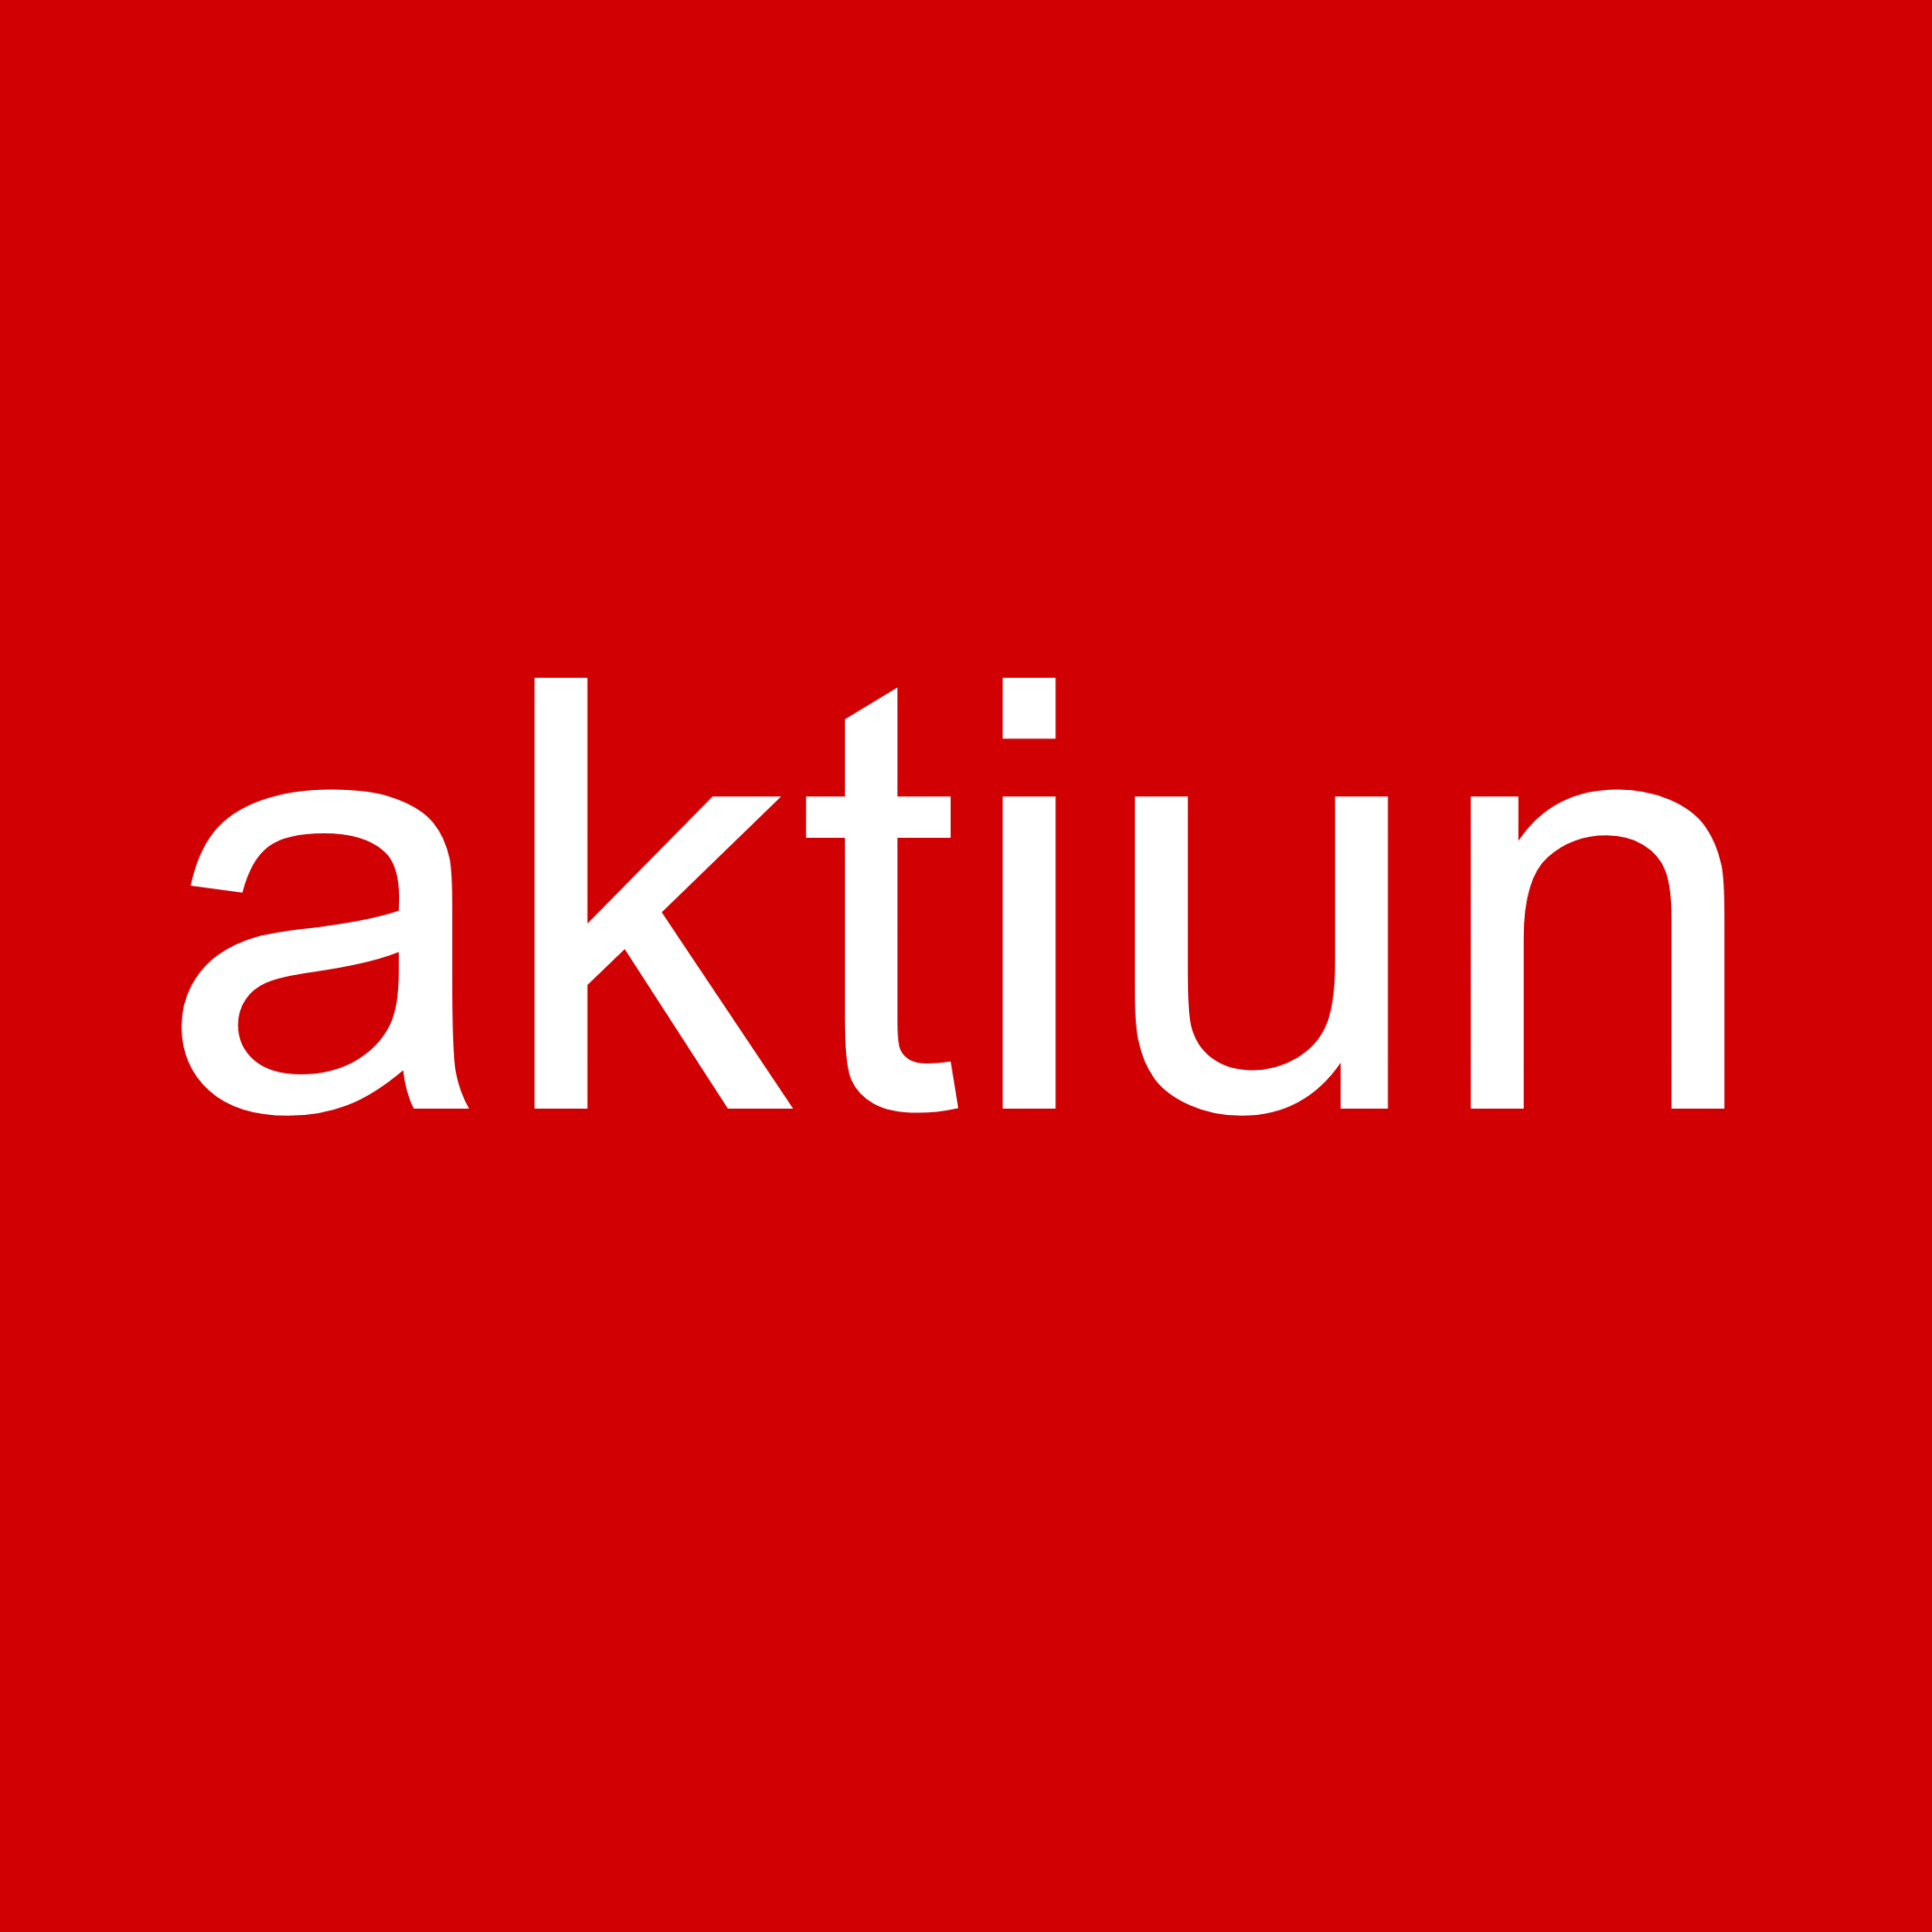 Aktiun, Inc. profile on Qualified.One